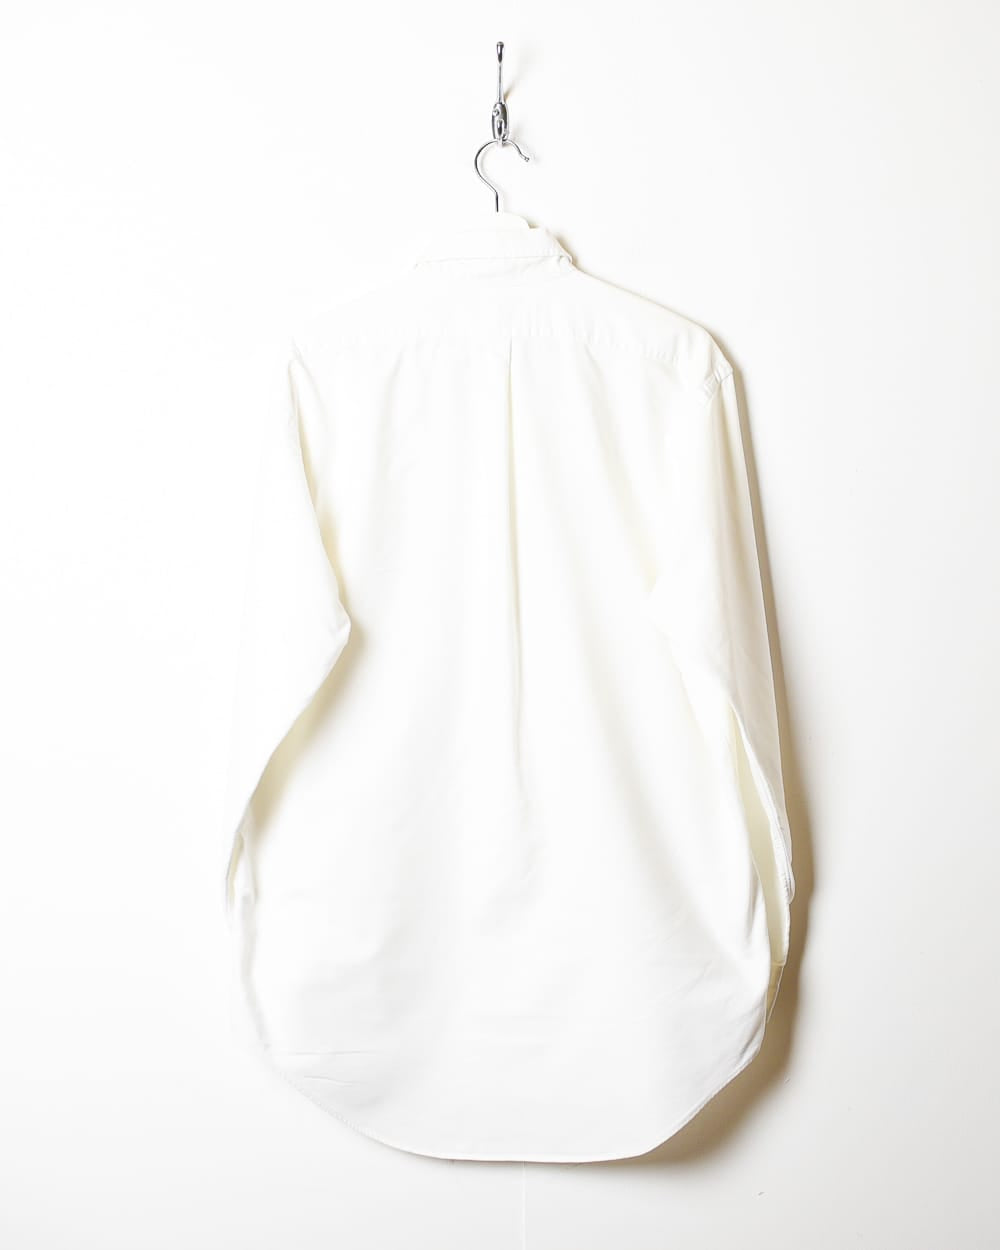 White Polo Ralph Lauren Yarmouth Shirt - Medium